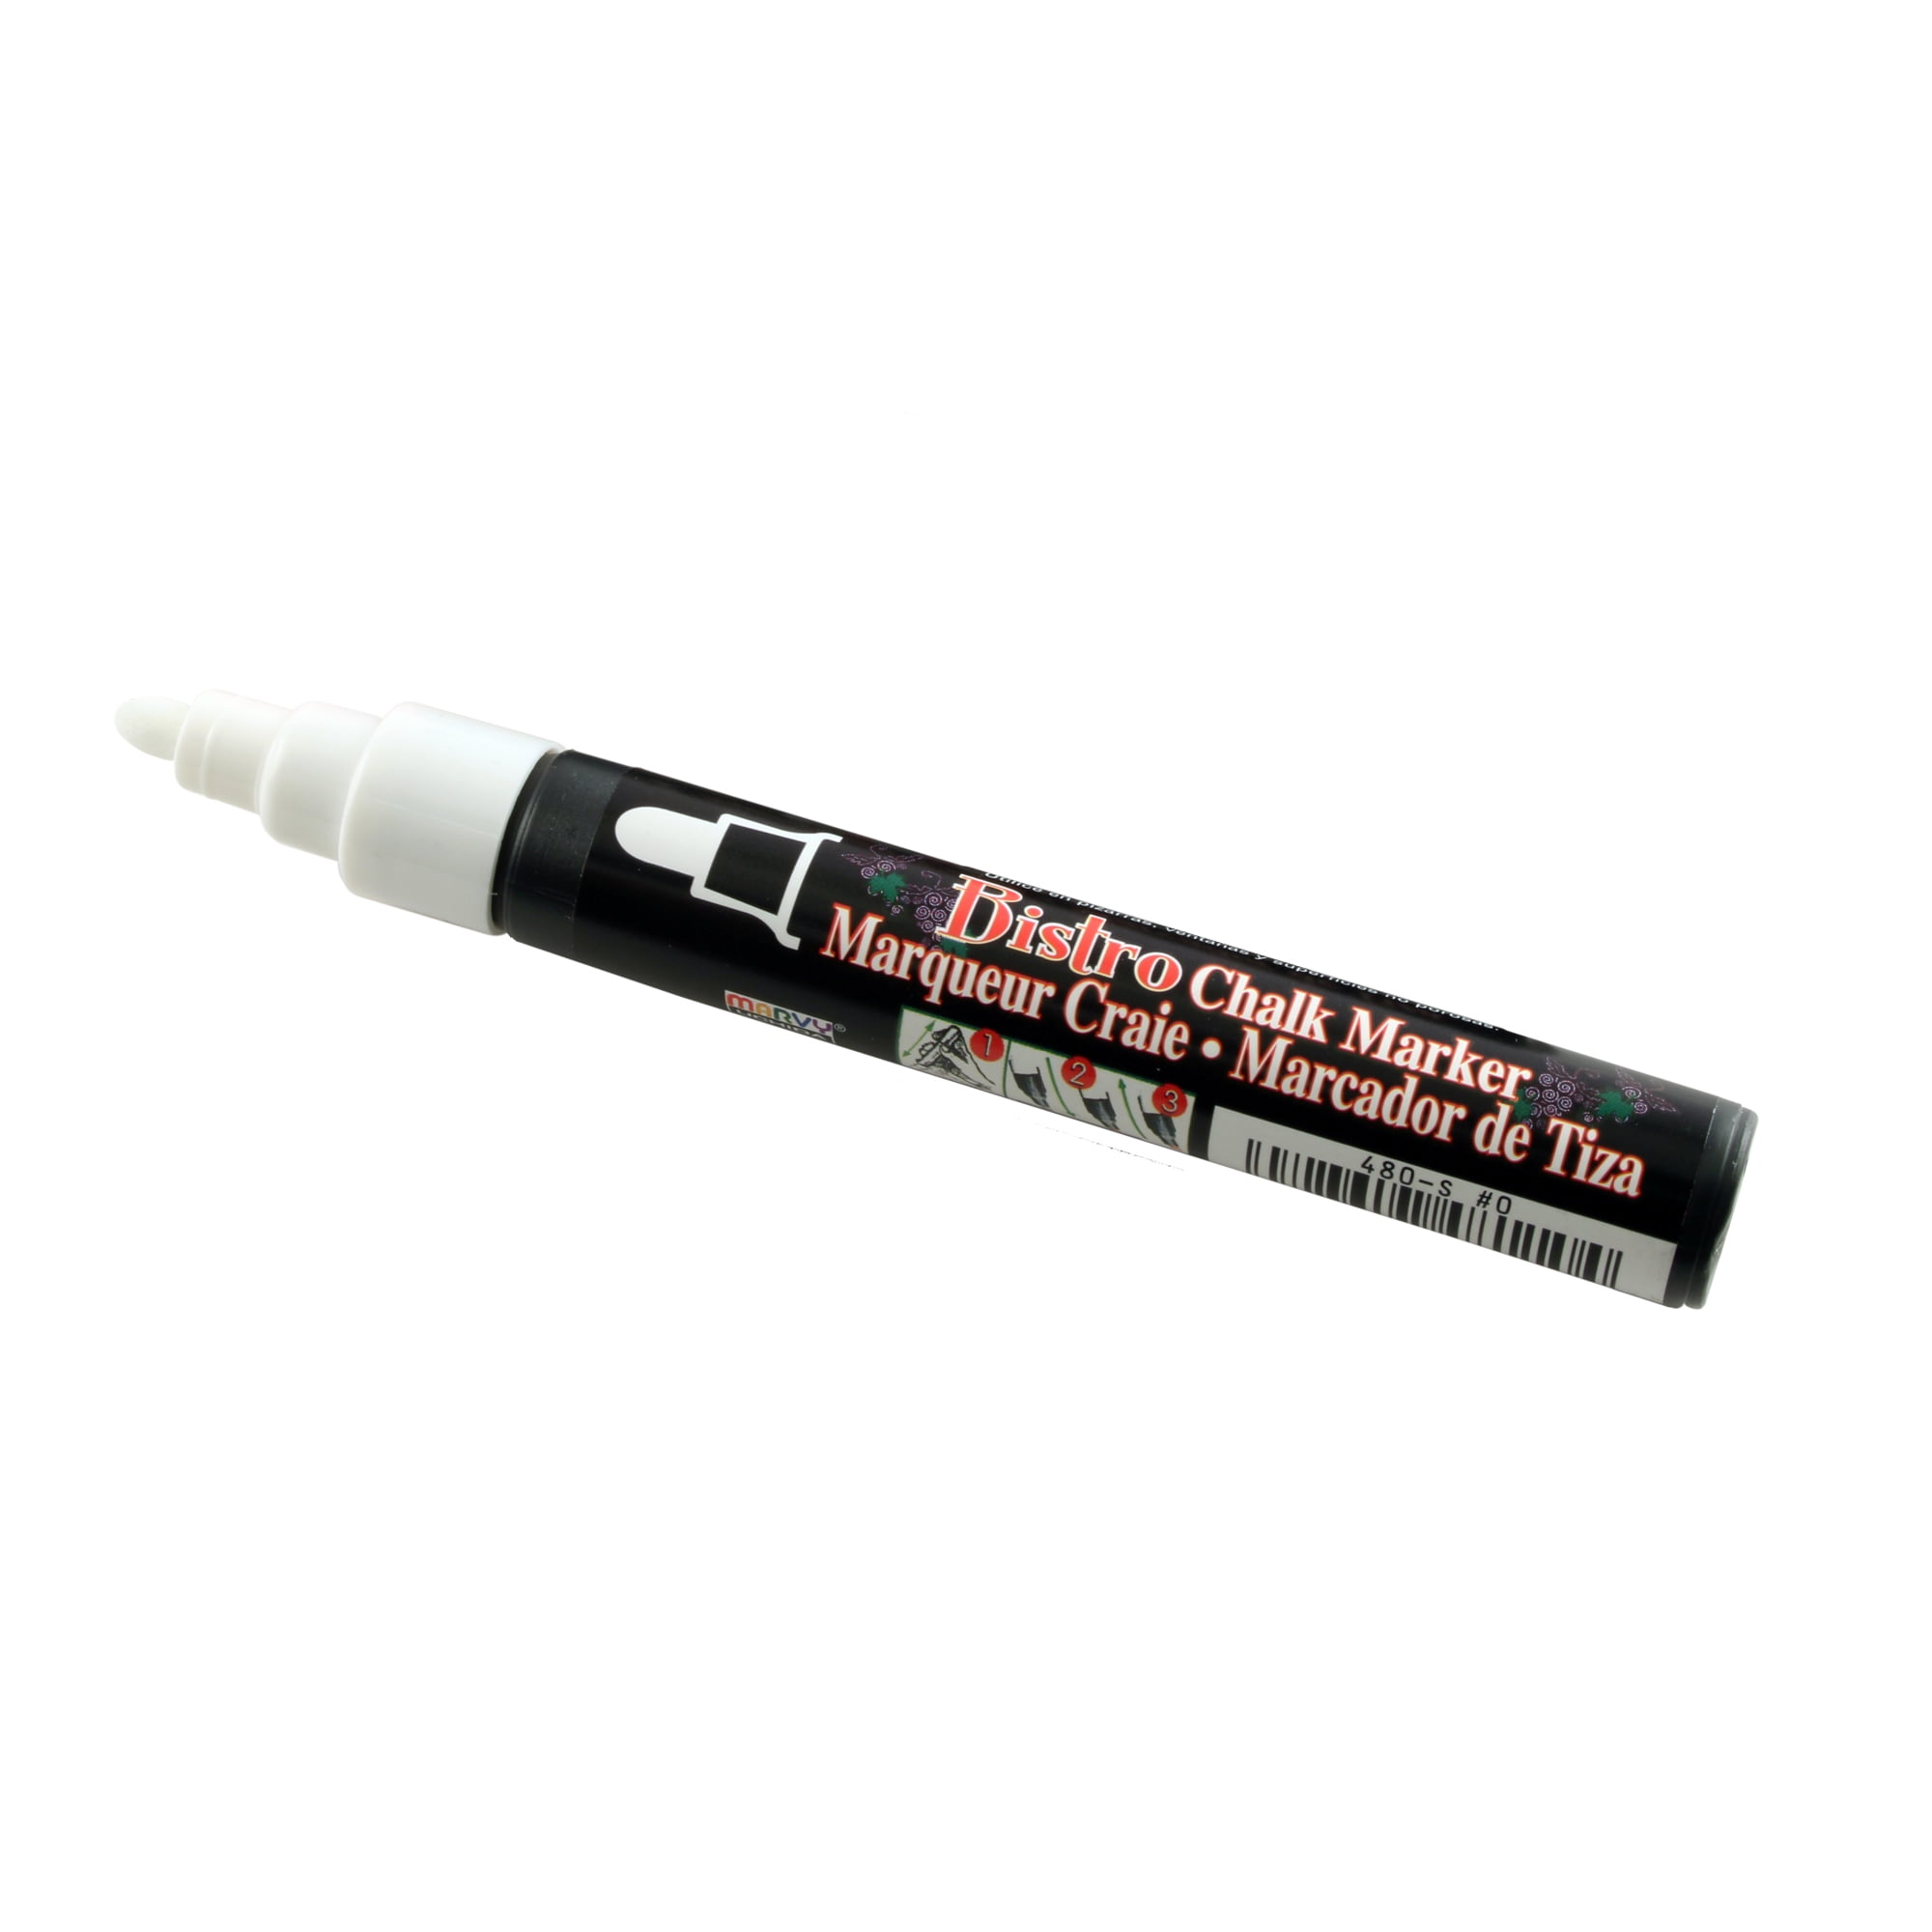 Marvy Uchida DecoColor Black Broad Point Paint Marker - Shop Pens at H-E-B